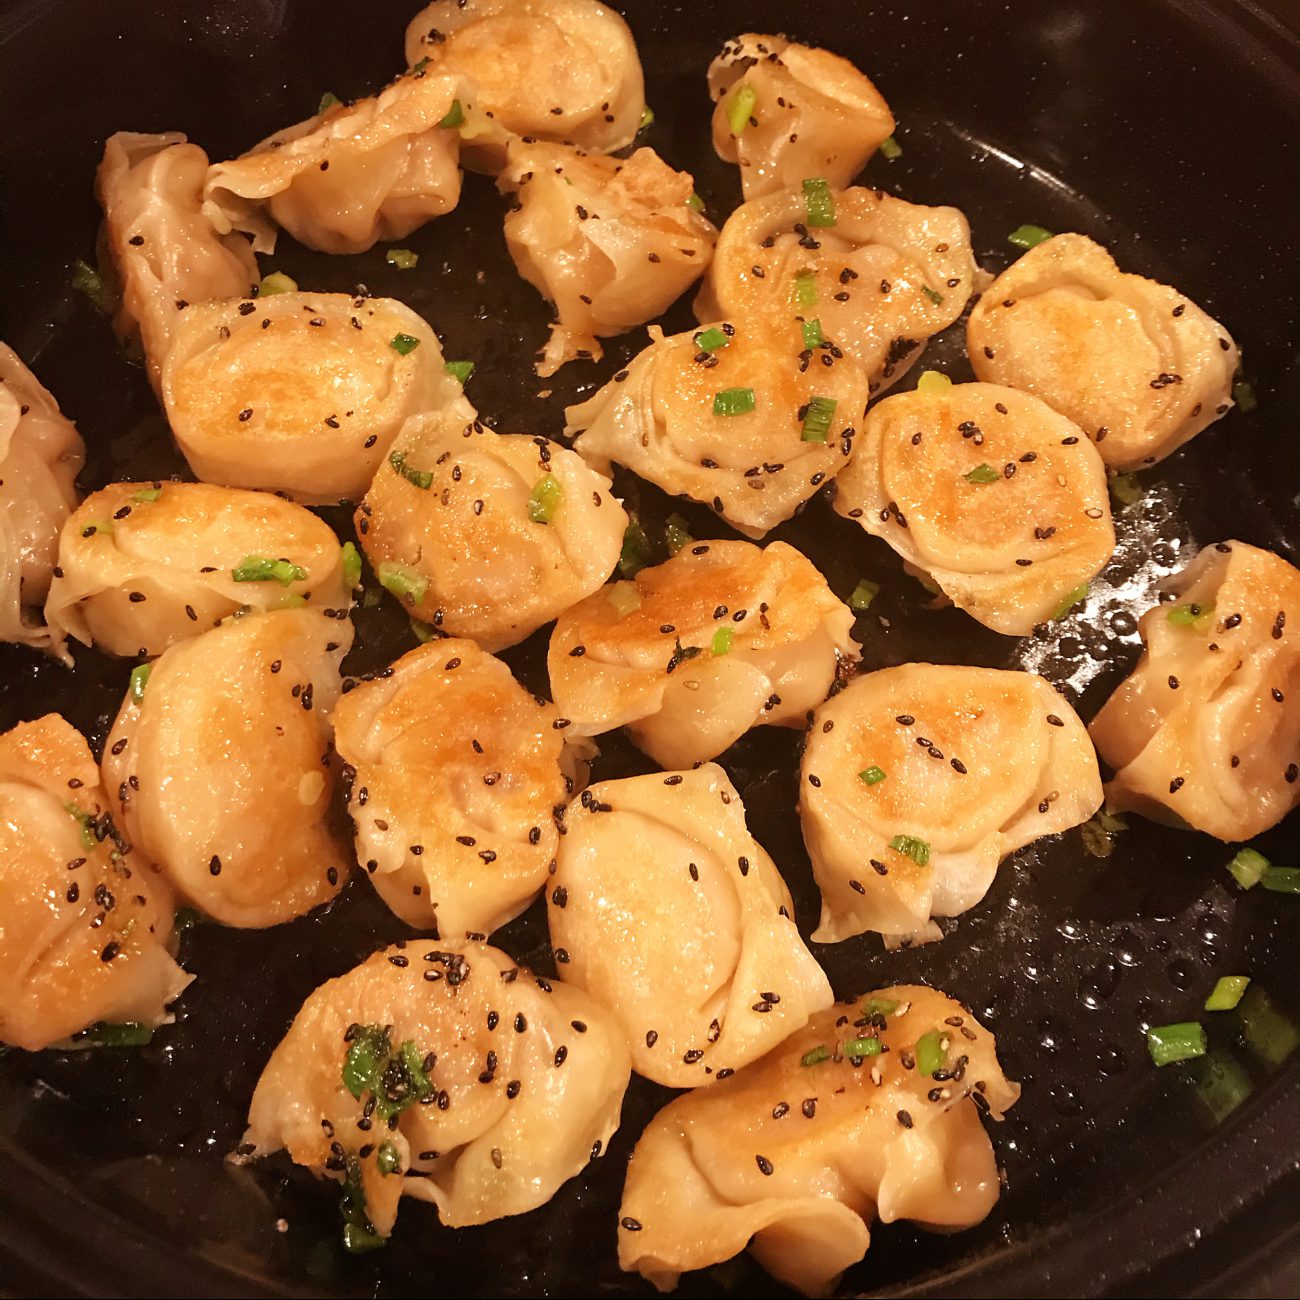 AirGO fried wontons (dumplings)